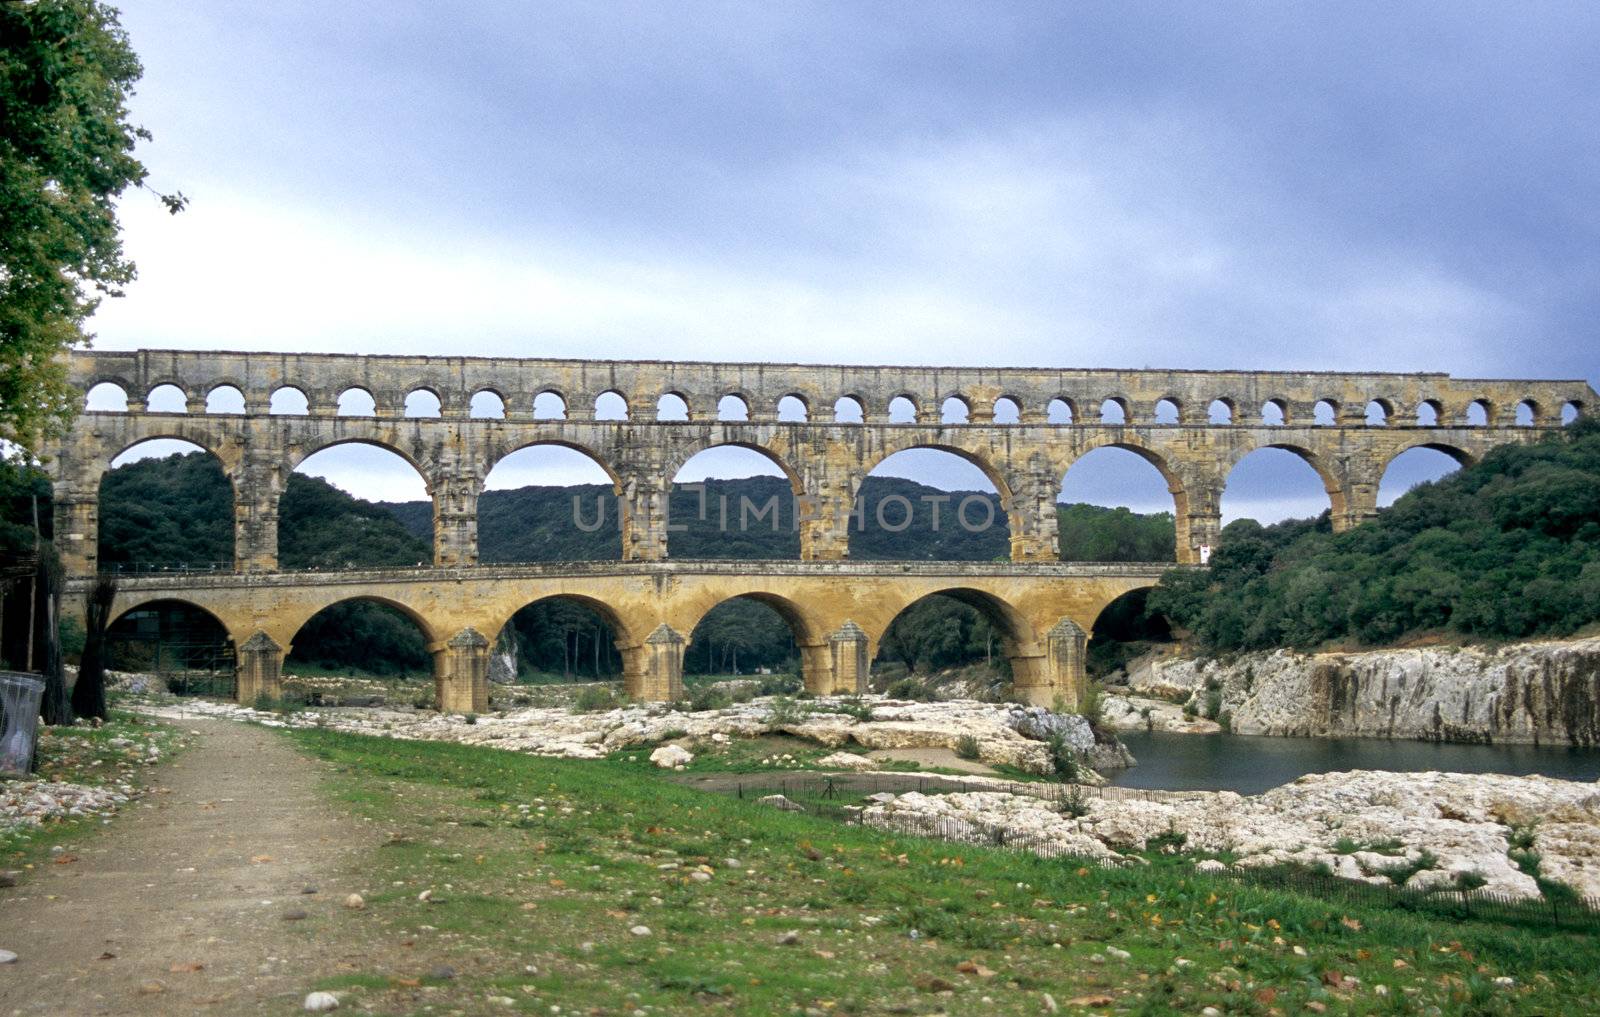 The ancient roman aqueduct Pont du Gard in Provence